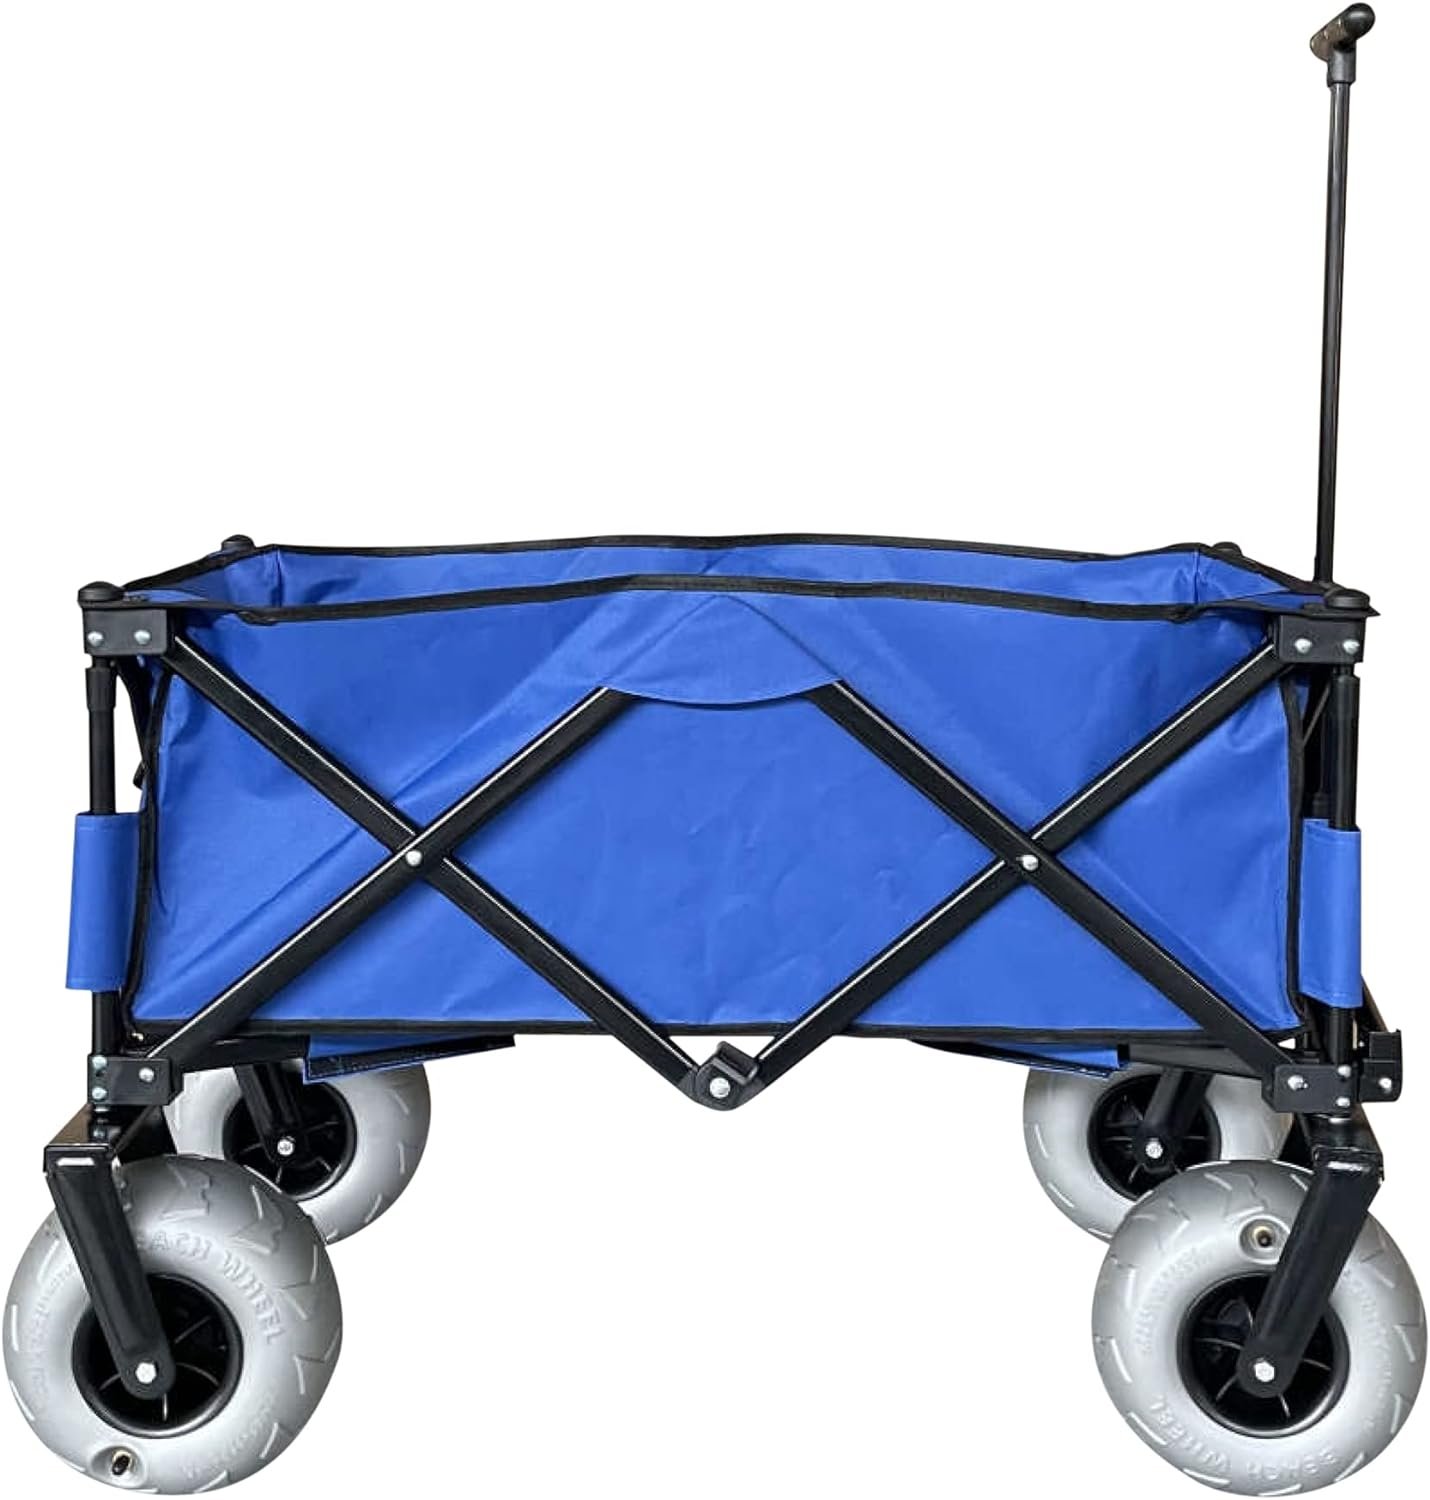 Juggernaut Carts Collapsible Folding Wagon Review